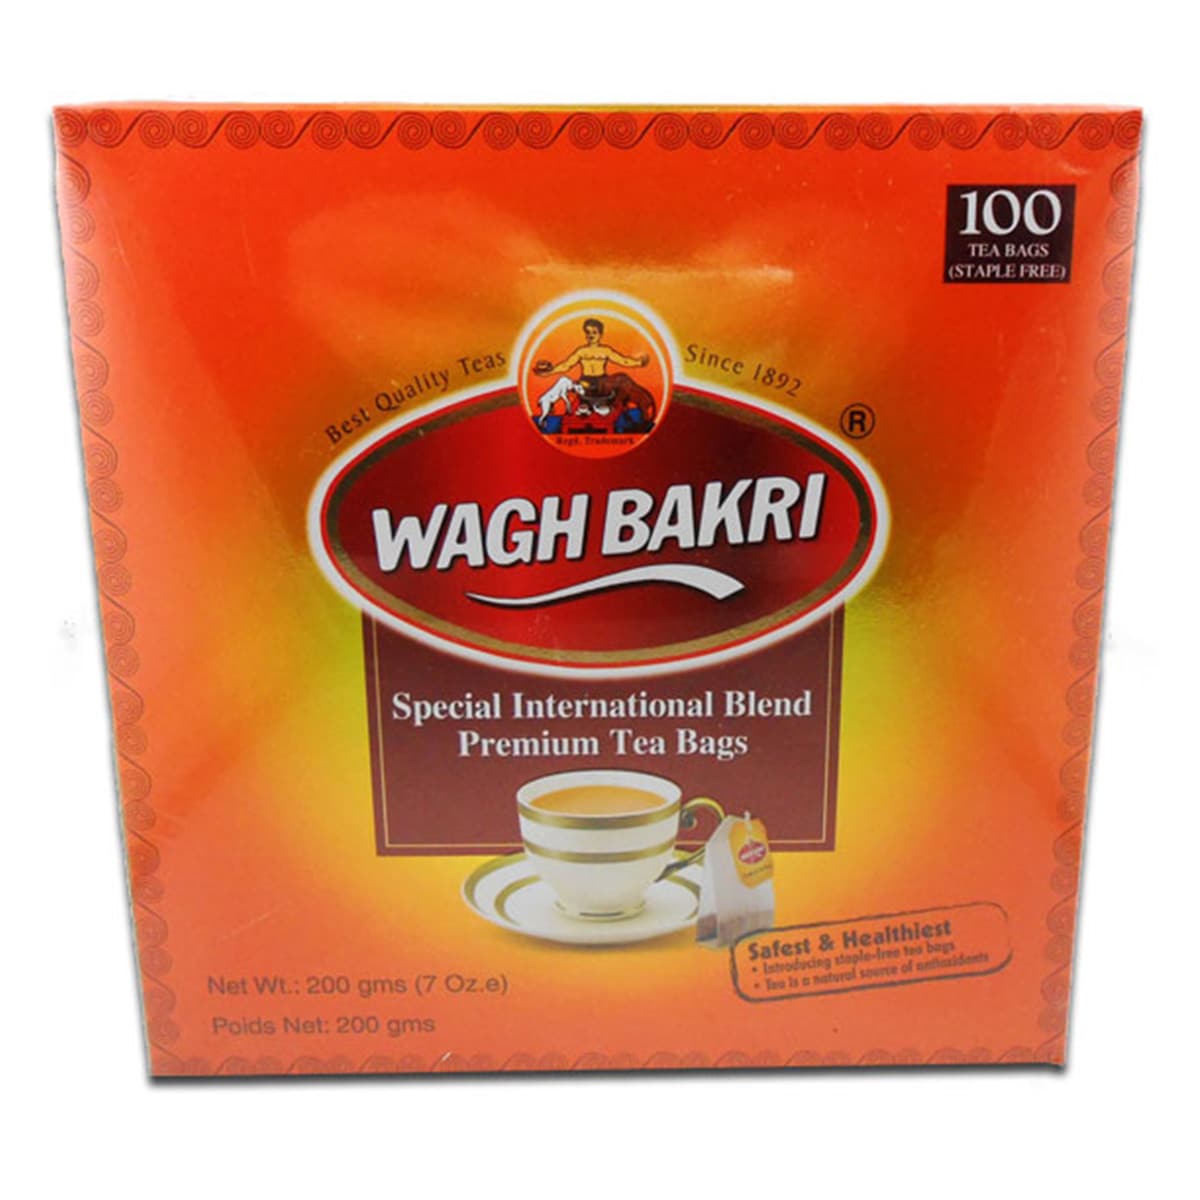 Buy Wagh Bakri Special International Blend Premium Tea (100 Tea Bags) - 200 gm